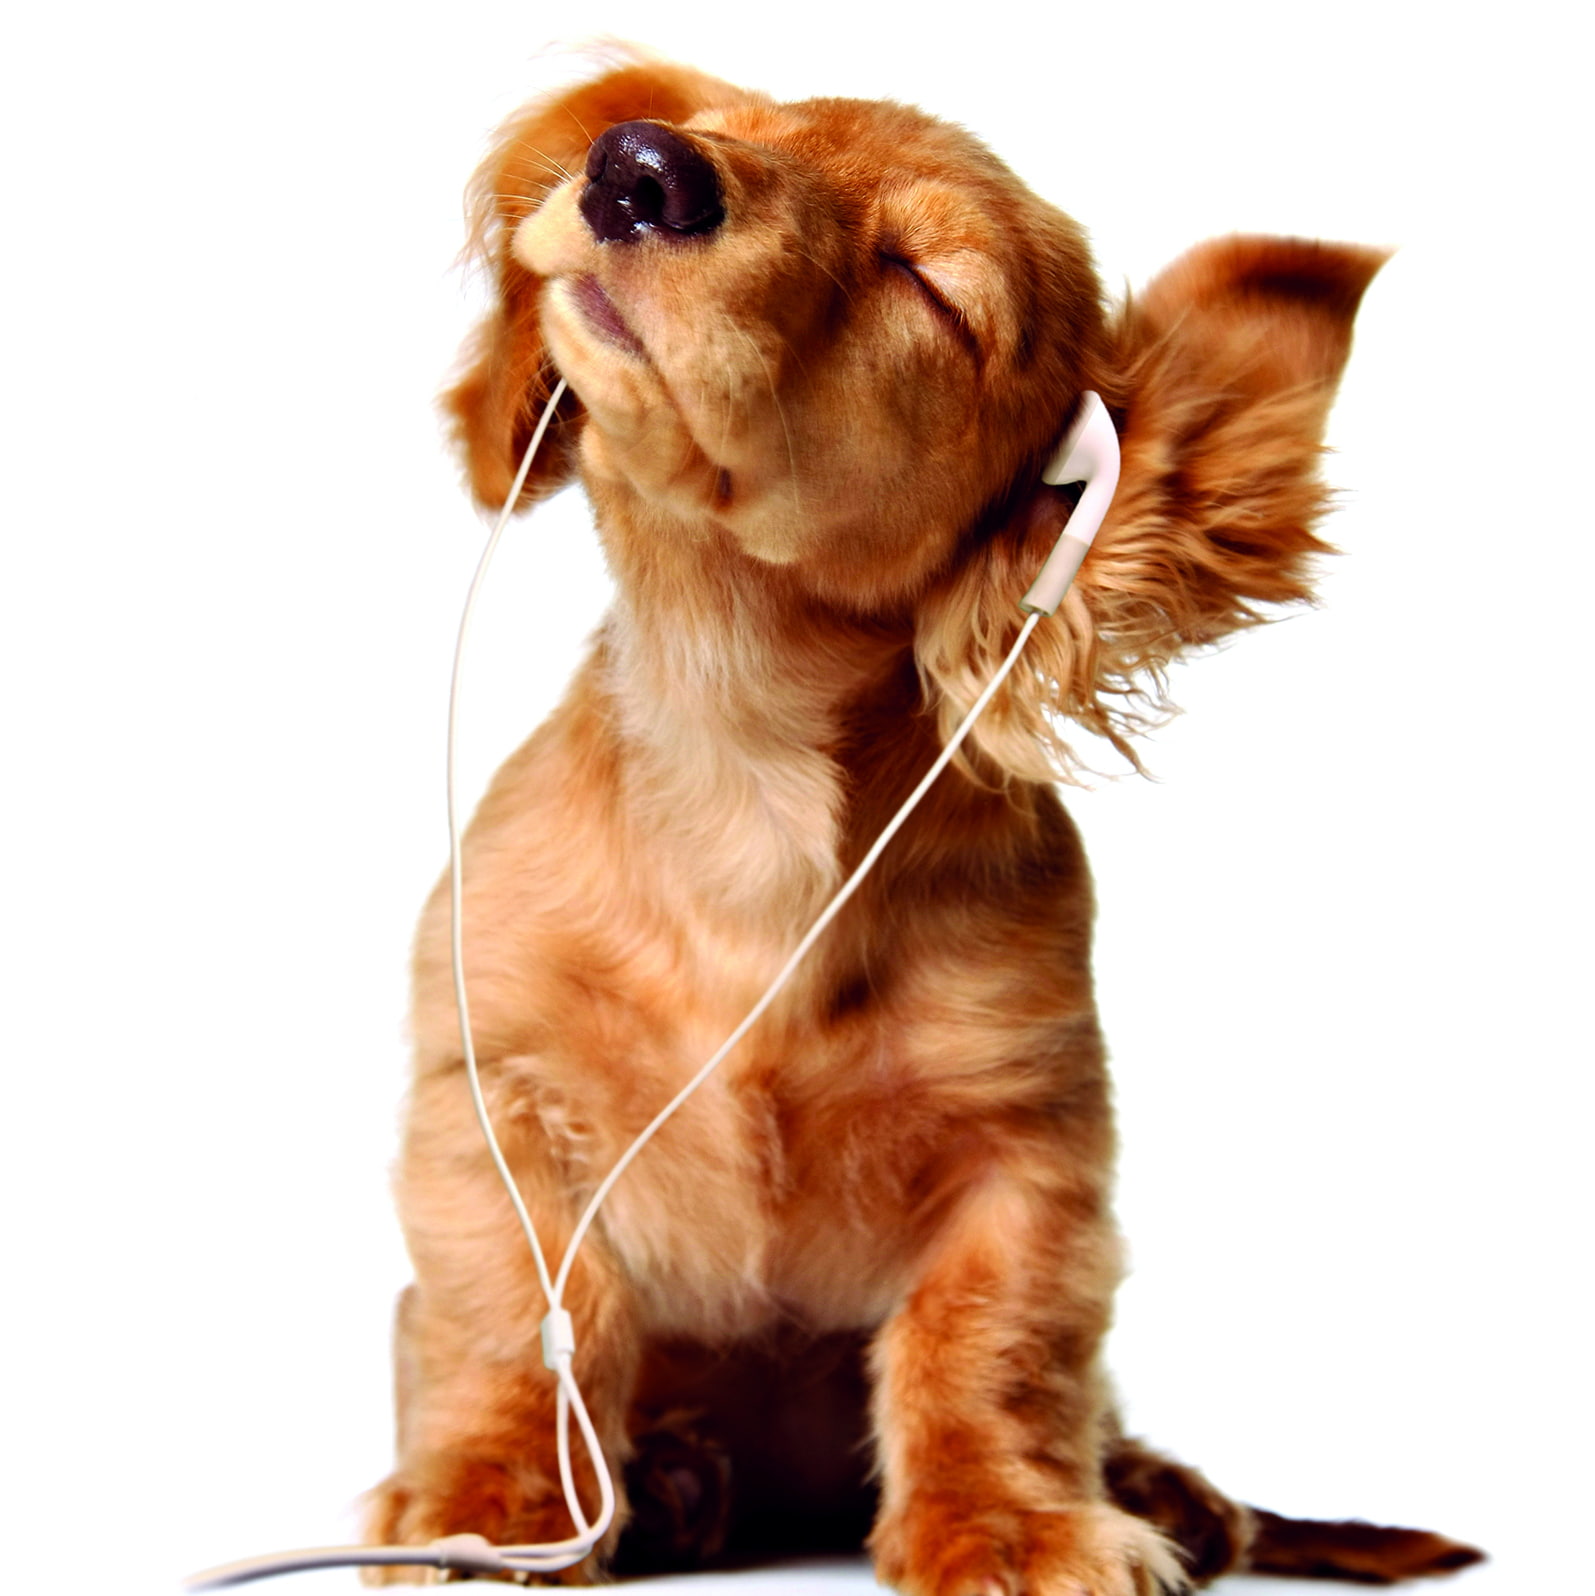 dog, headphone, listen, music, one animal, mammal, animal themes